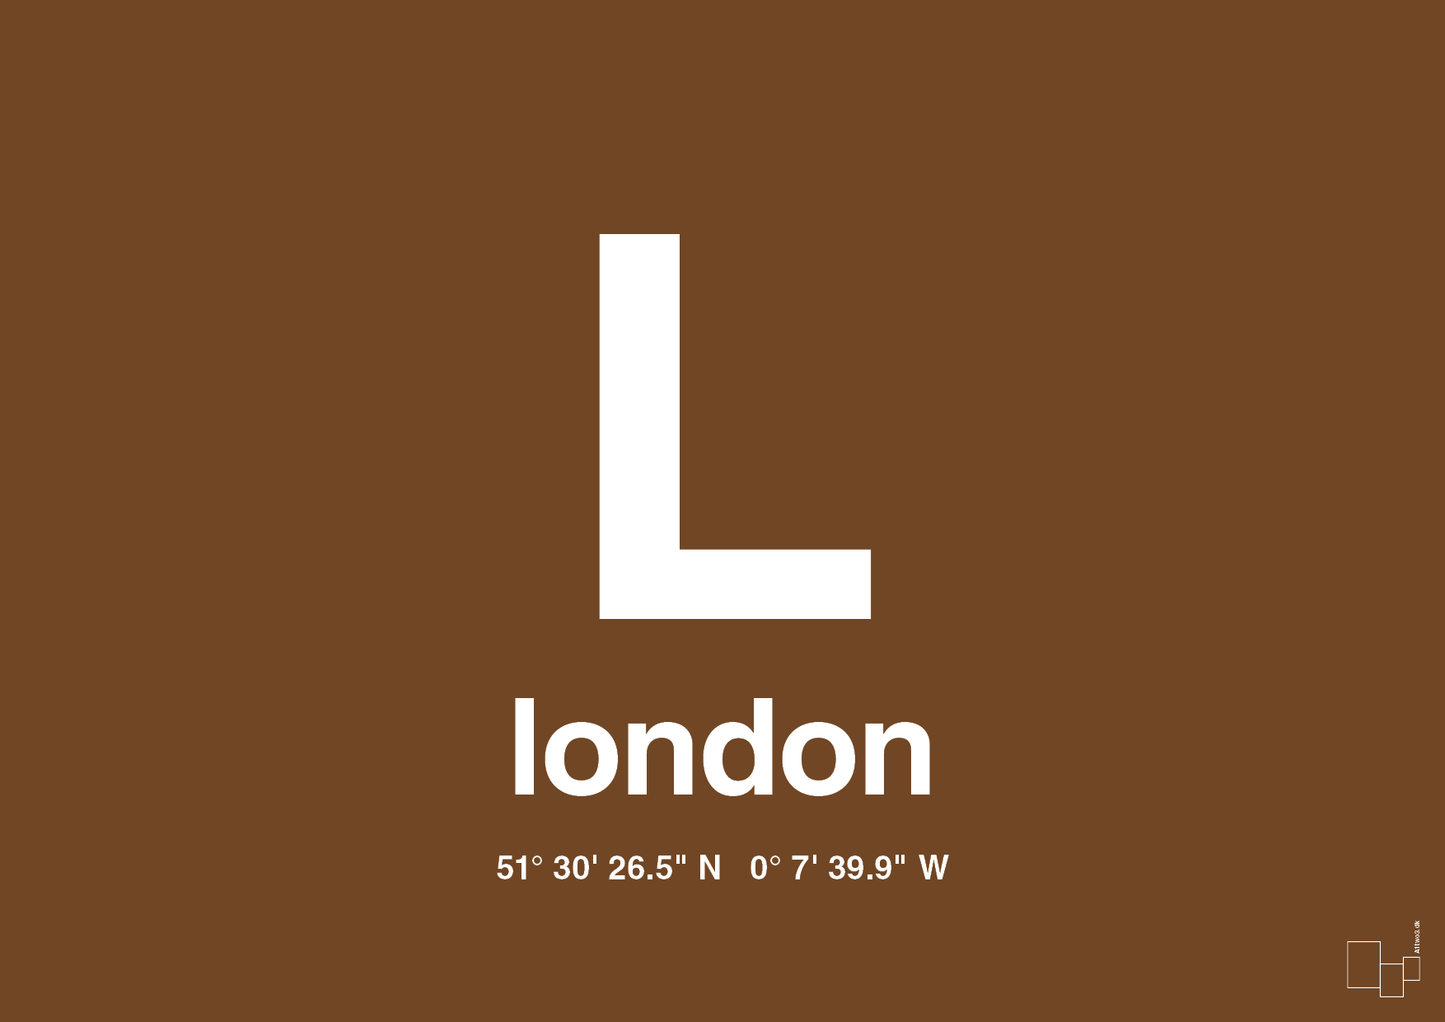 byplakat london med koordinater - Plakat med Grafik i Dark Brown